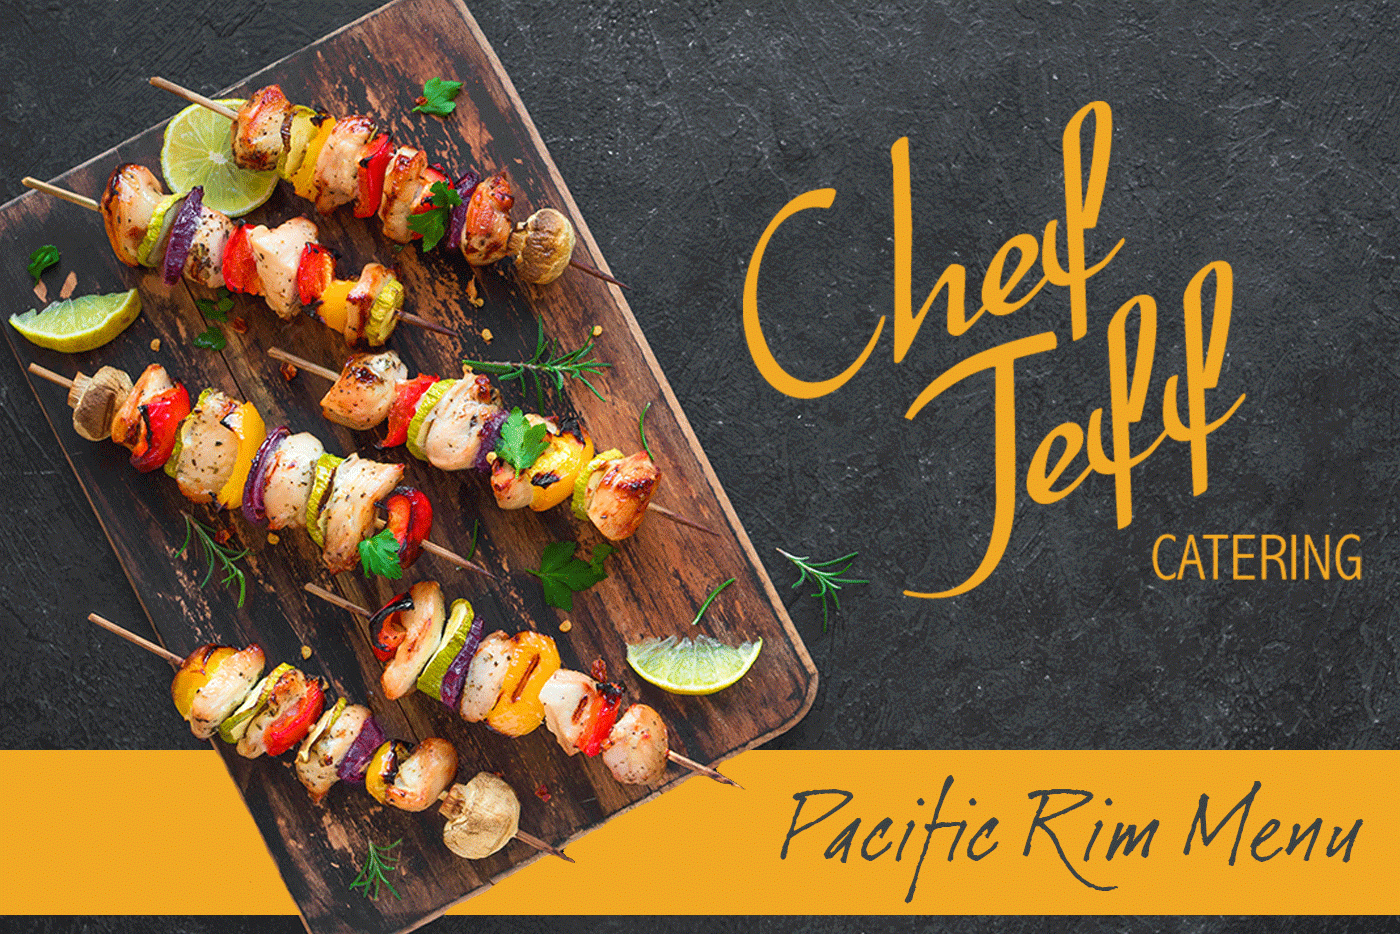 https://www.chef-jeff.com/wp-content/uploads/2019/06/Pacific_Rim_Menu-1400x934.gif